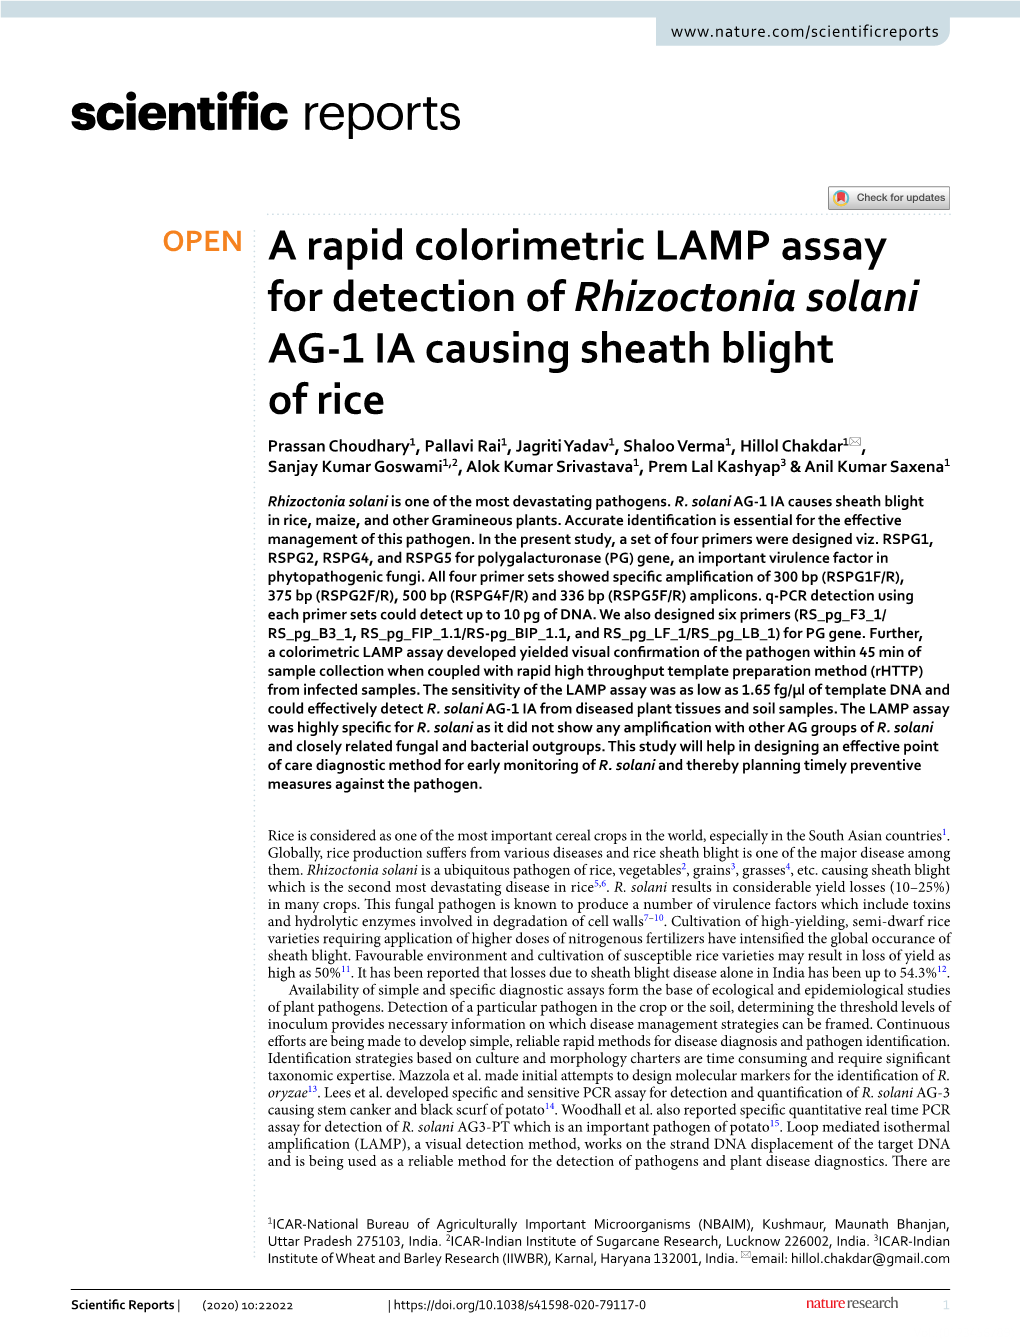 A Rapid Colorimetric LAMP Assay for Detection of Rhizoctonia Solani AG